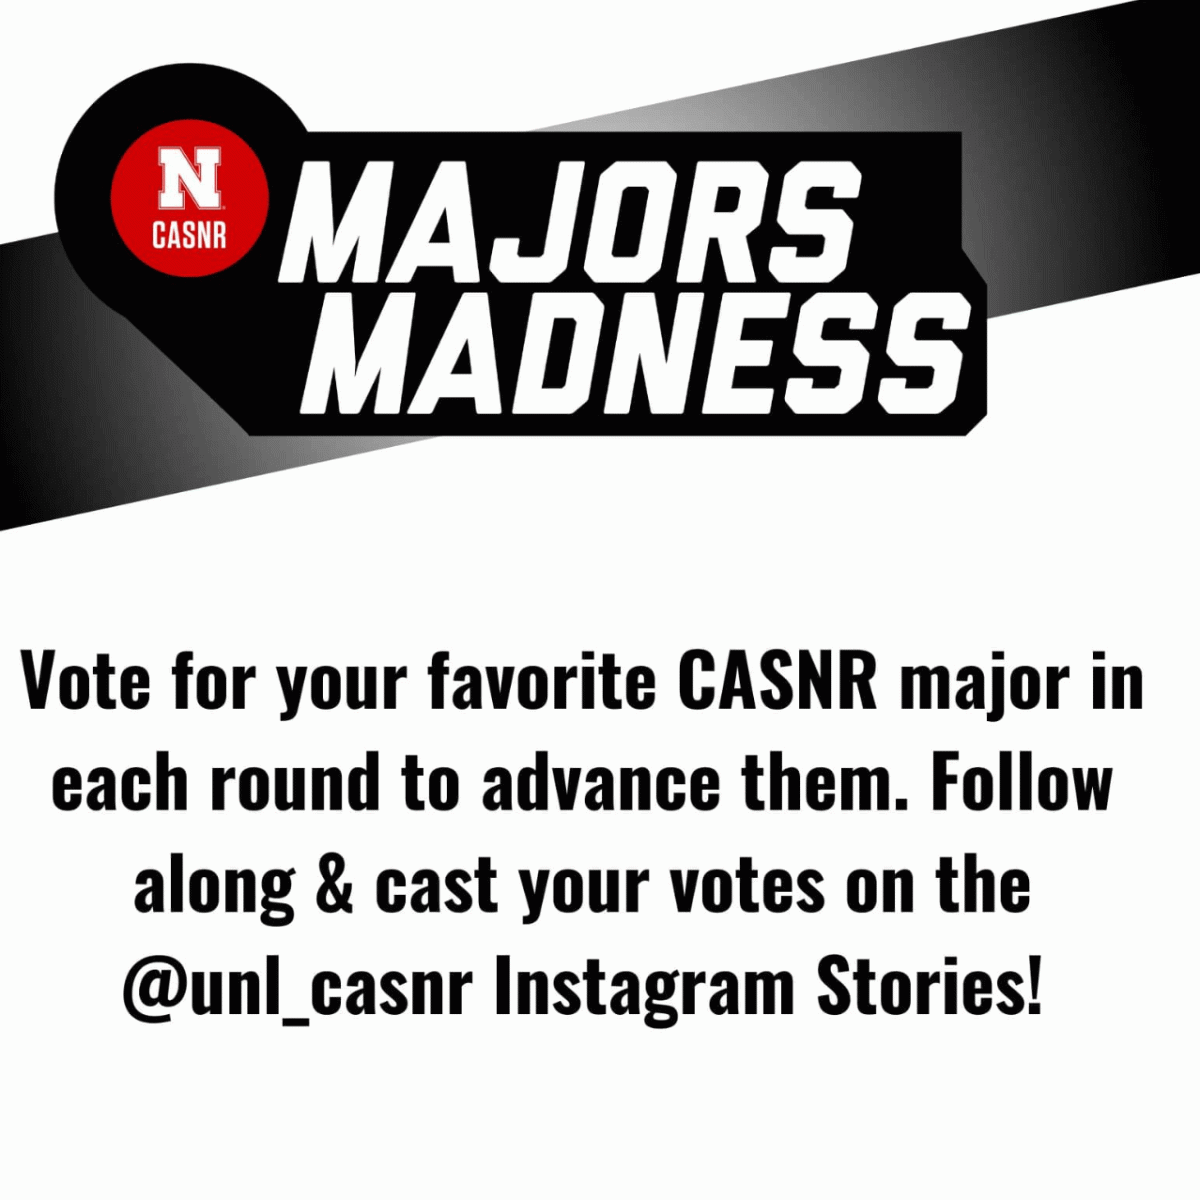 Vote for your favorite major in CASNR